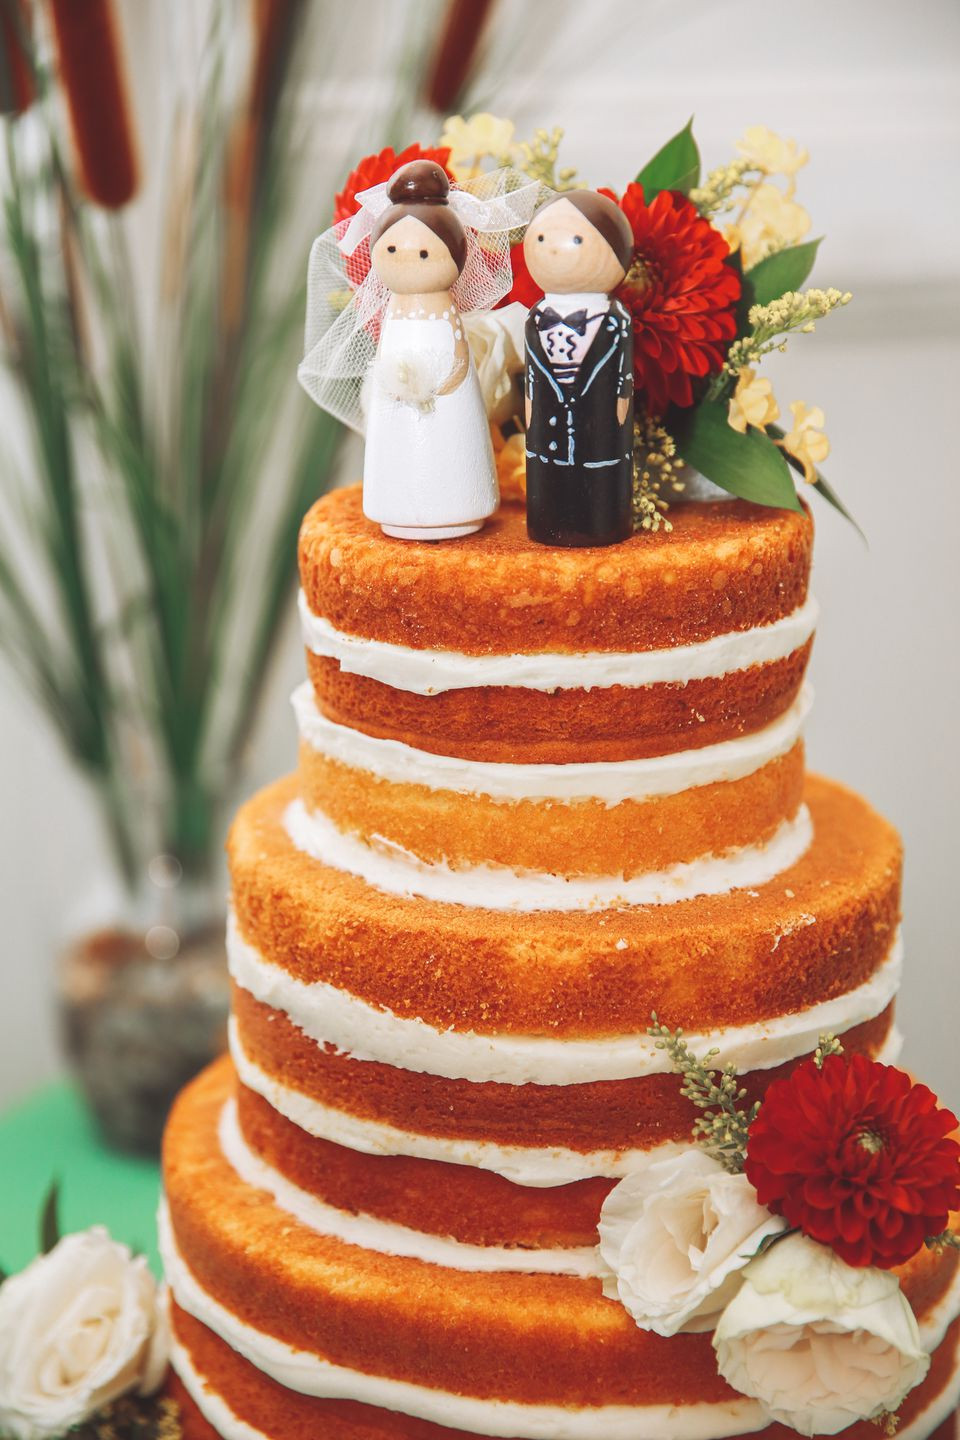 DIY Wedding Cupcakes
 Inspiring Tales of DIY Wedding Cakes